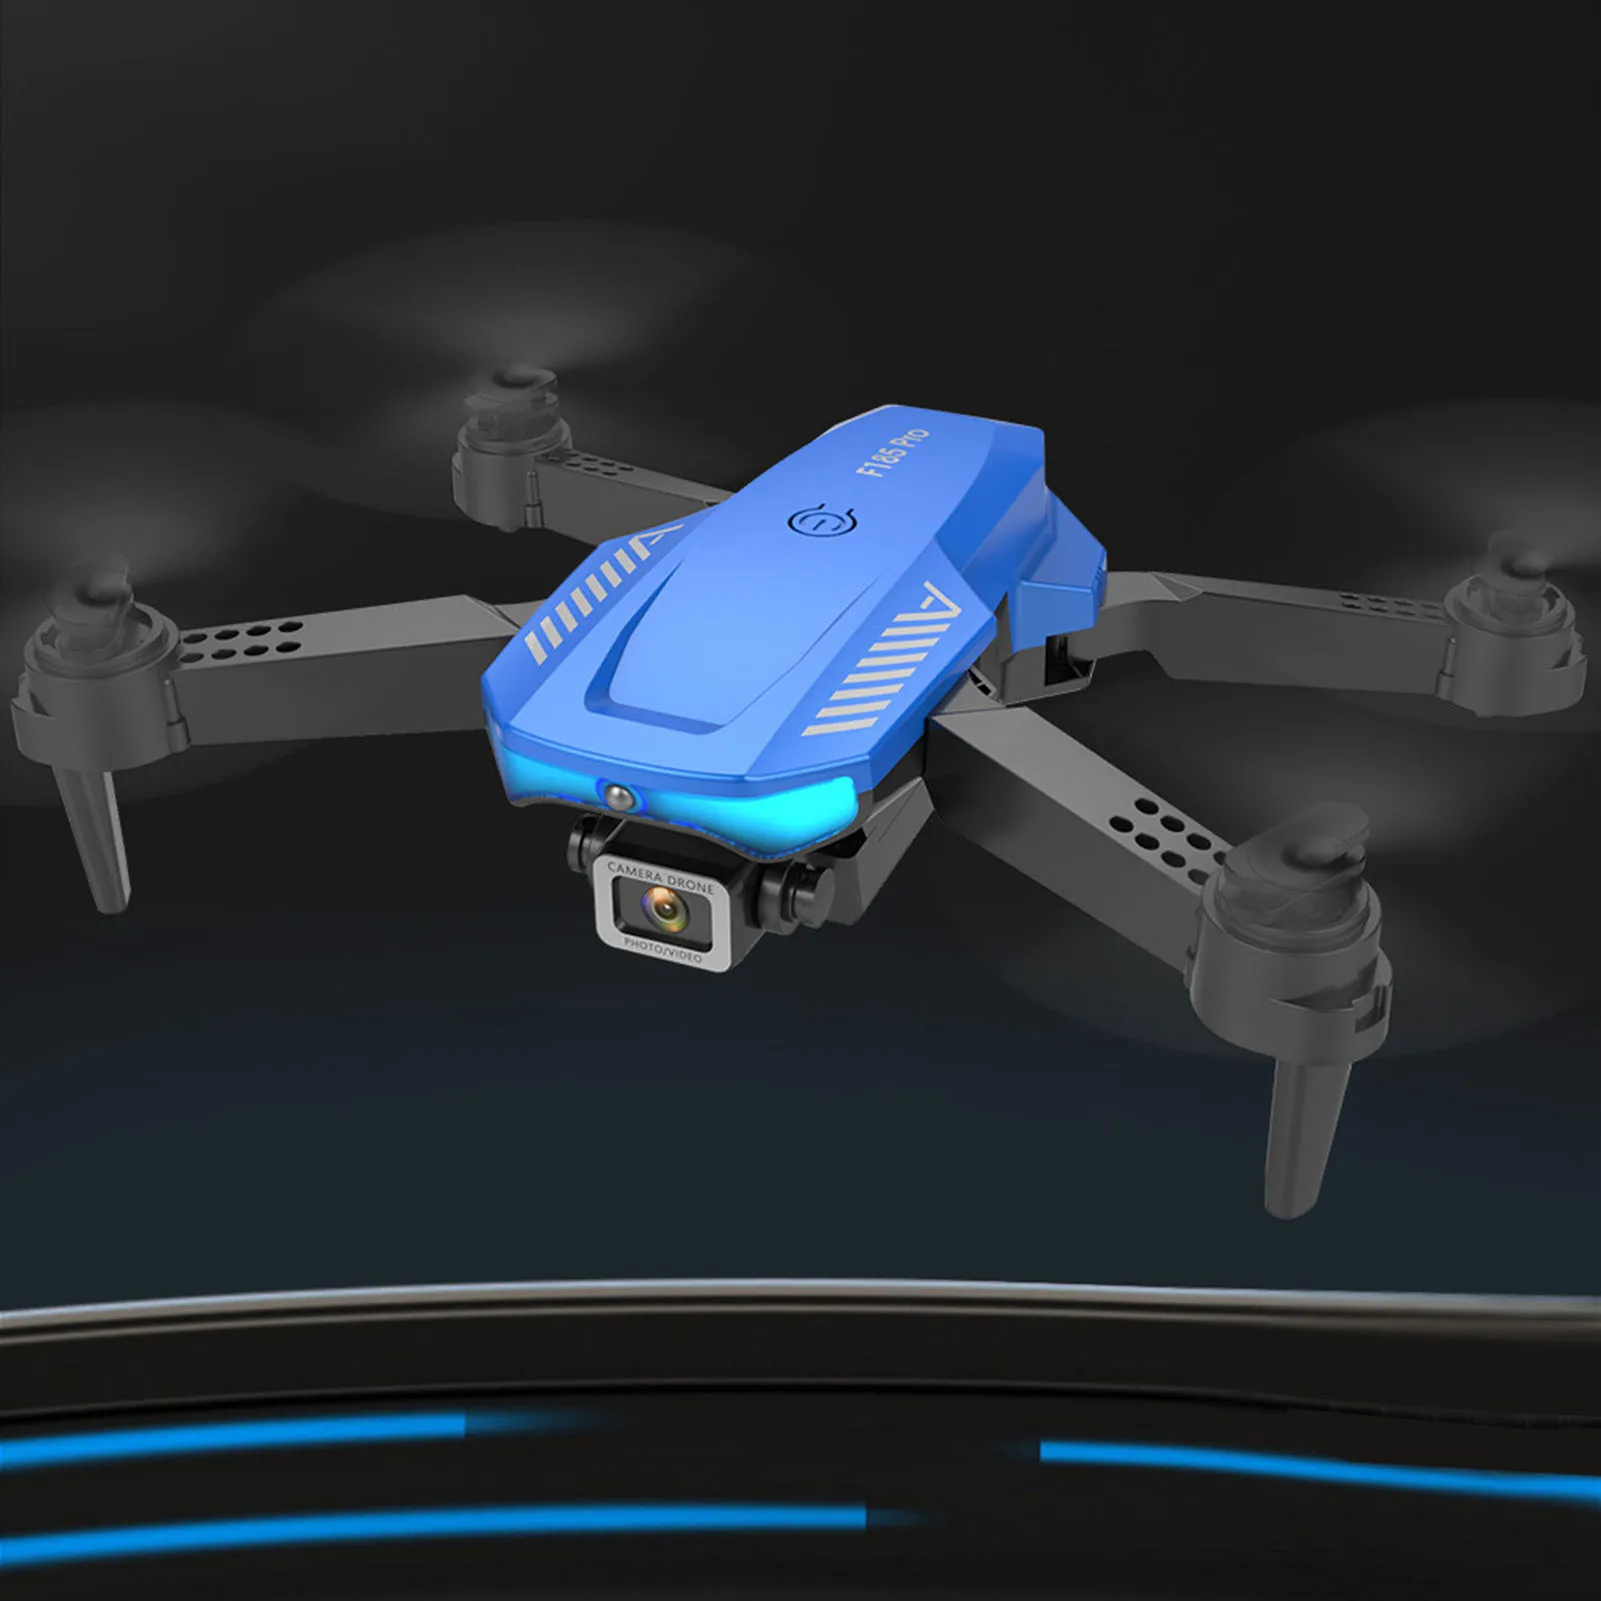 

4k Dual Camera Quadcopter Drone 50x Zoom Trajectory Flight Six Axis Gyroscope WiFi APP Remote Control